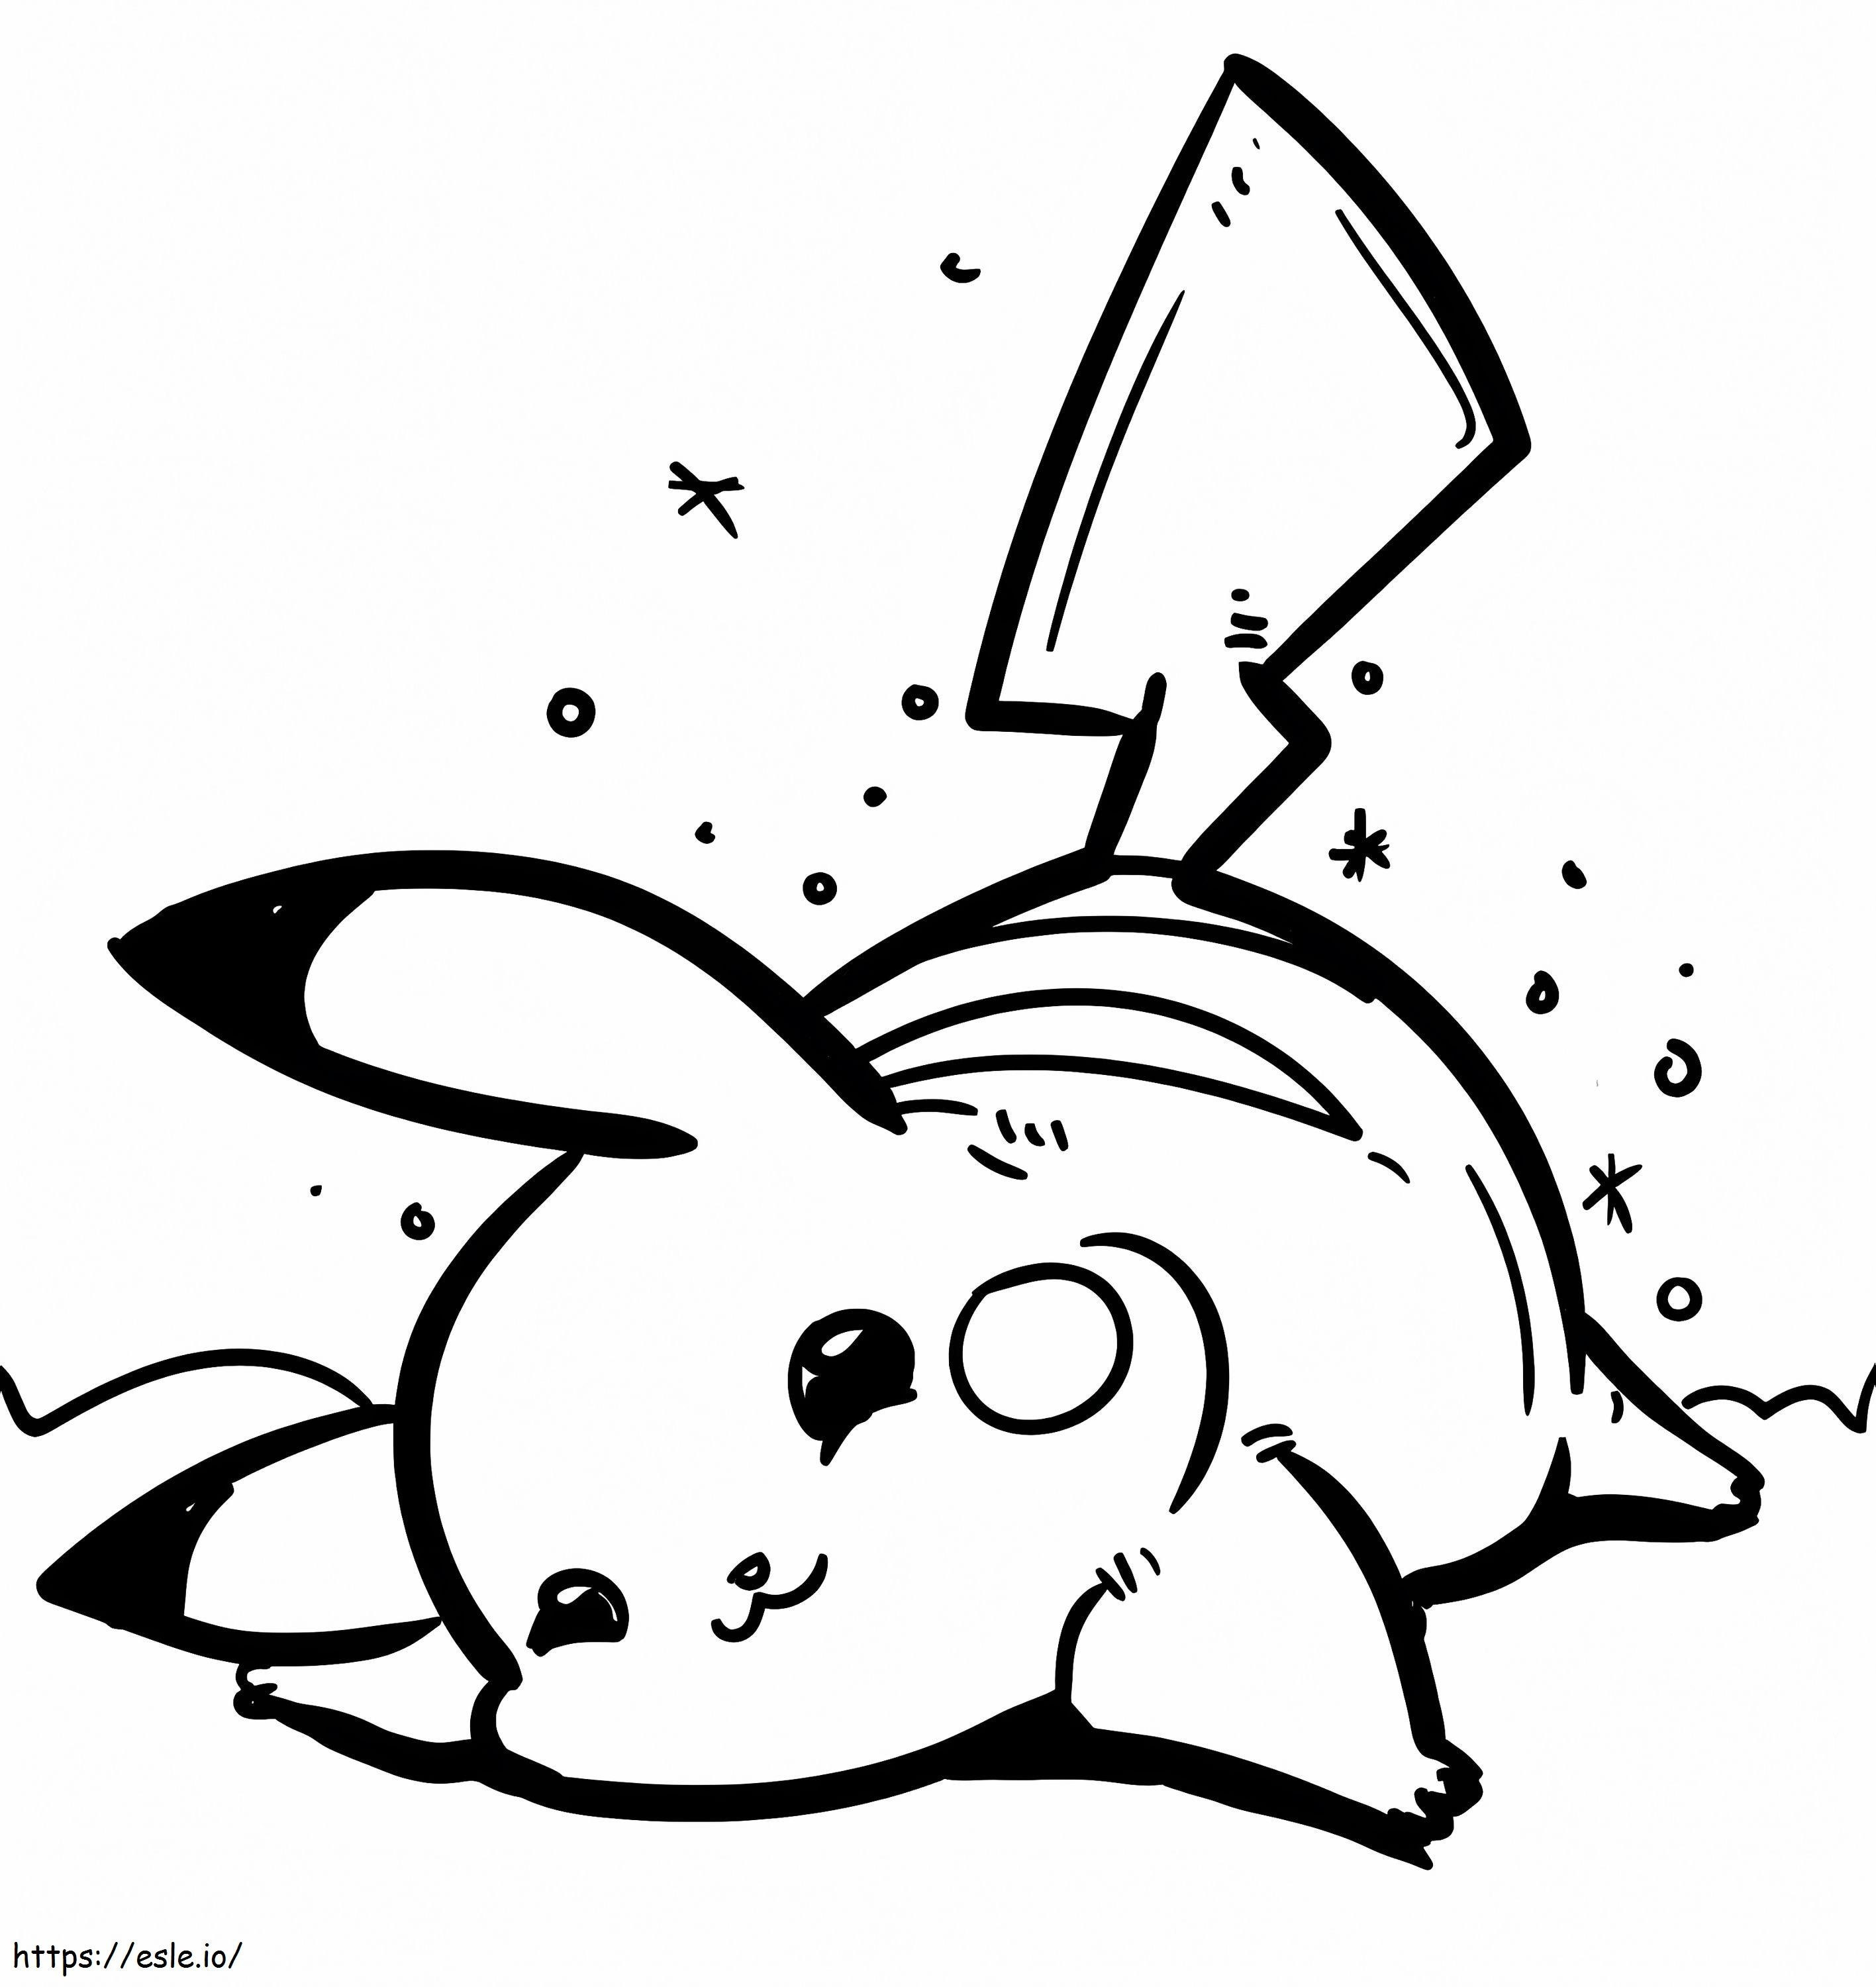 Printable Cute Pikachu coloring page